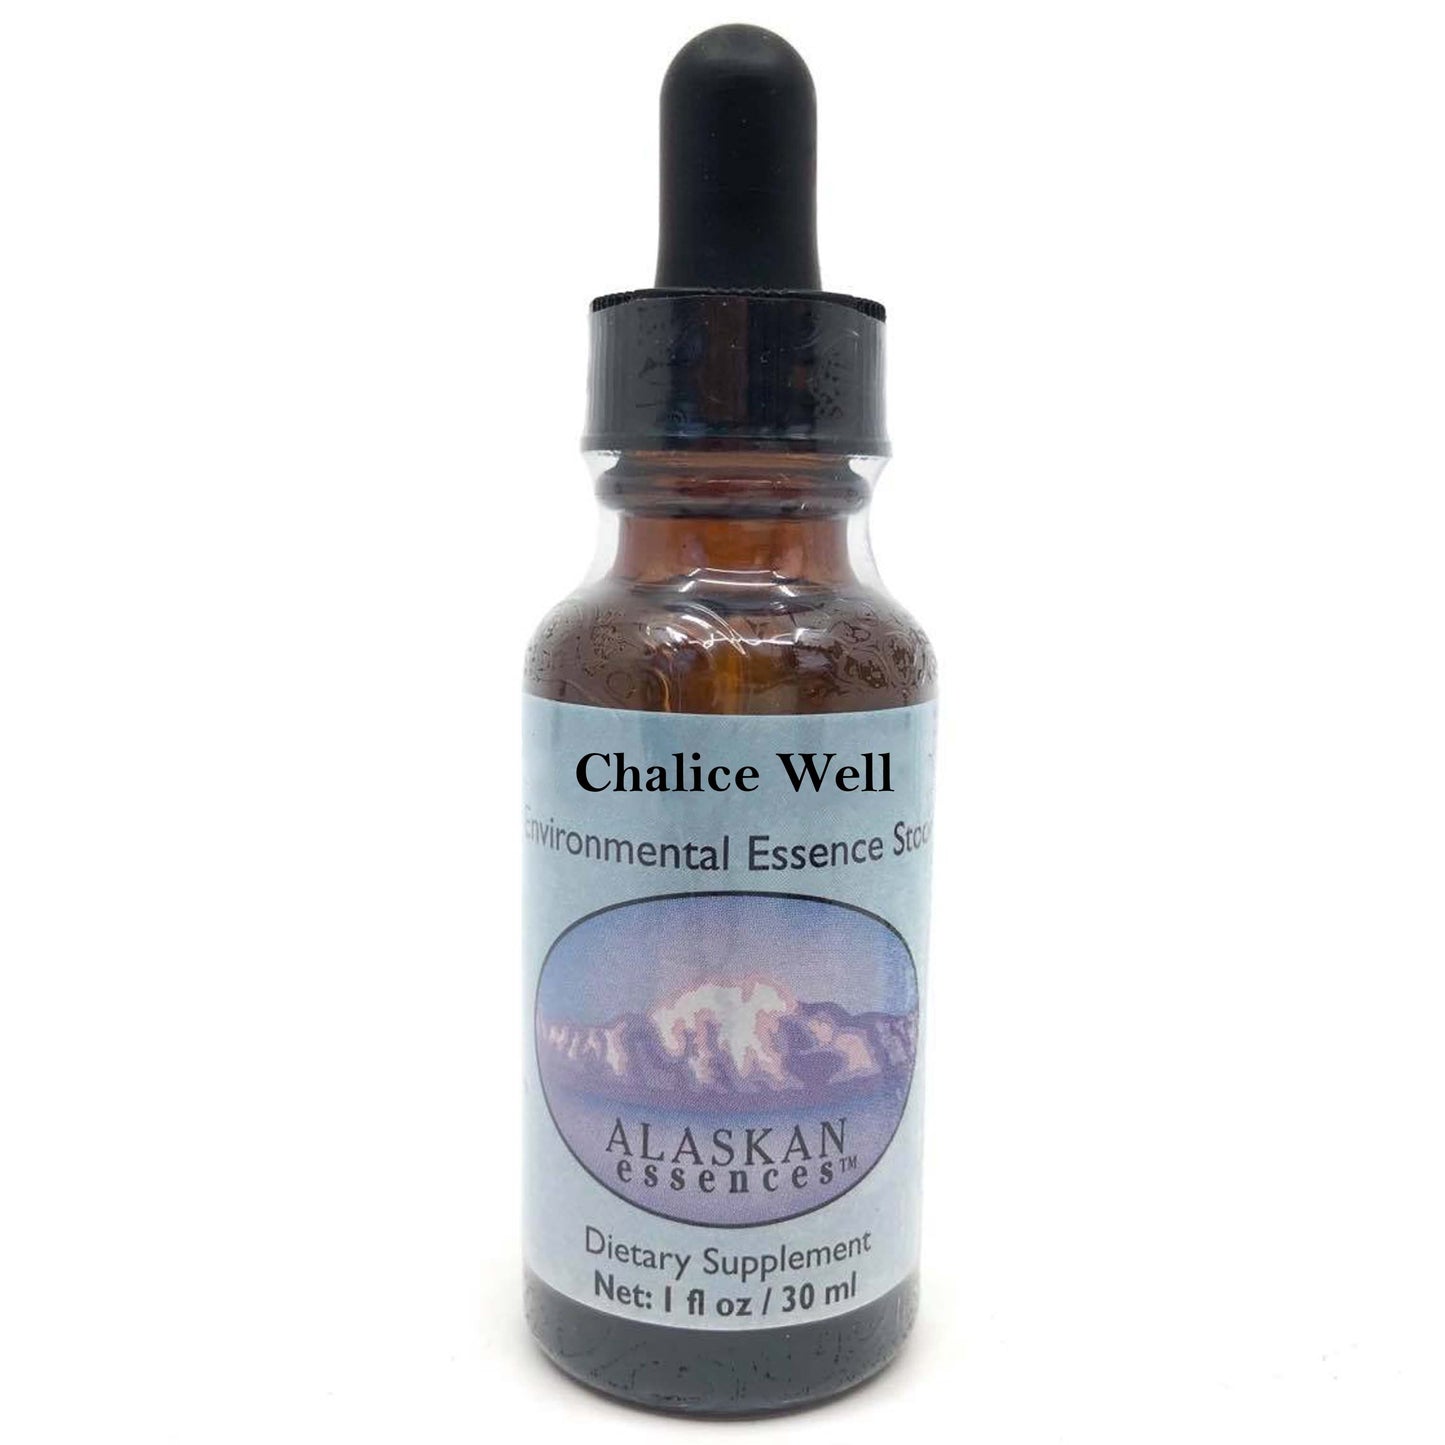 Chalice well environmental essence 30ml